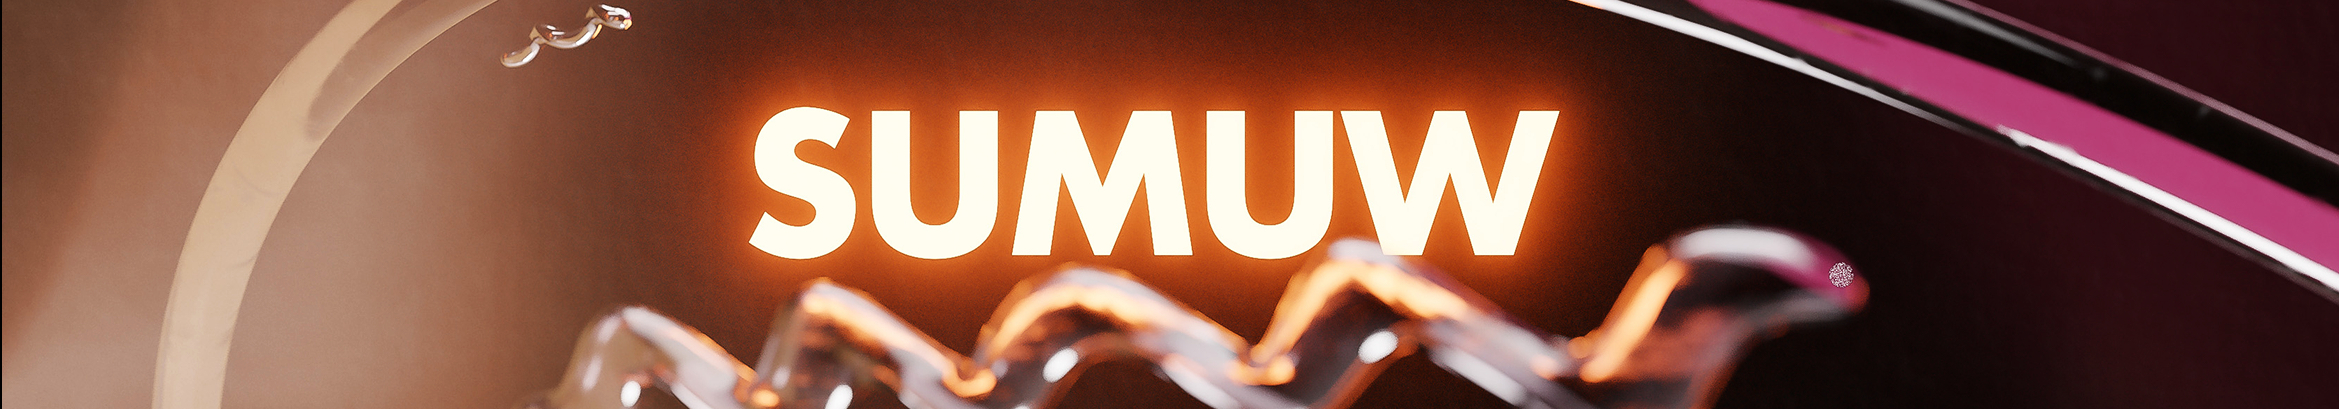 sumuw advertising's profile banner